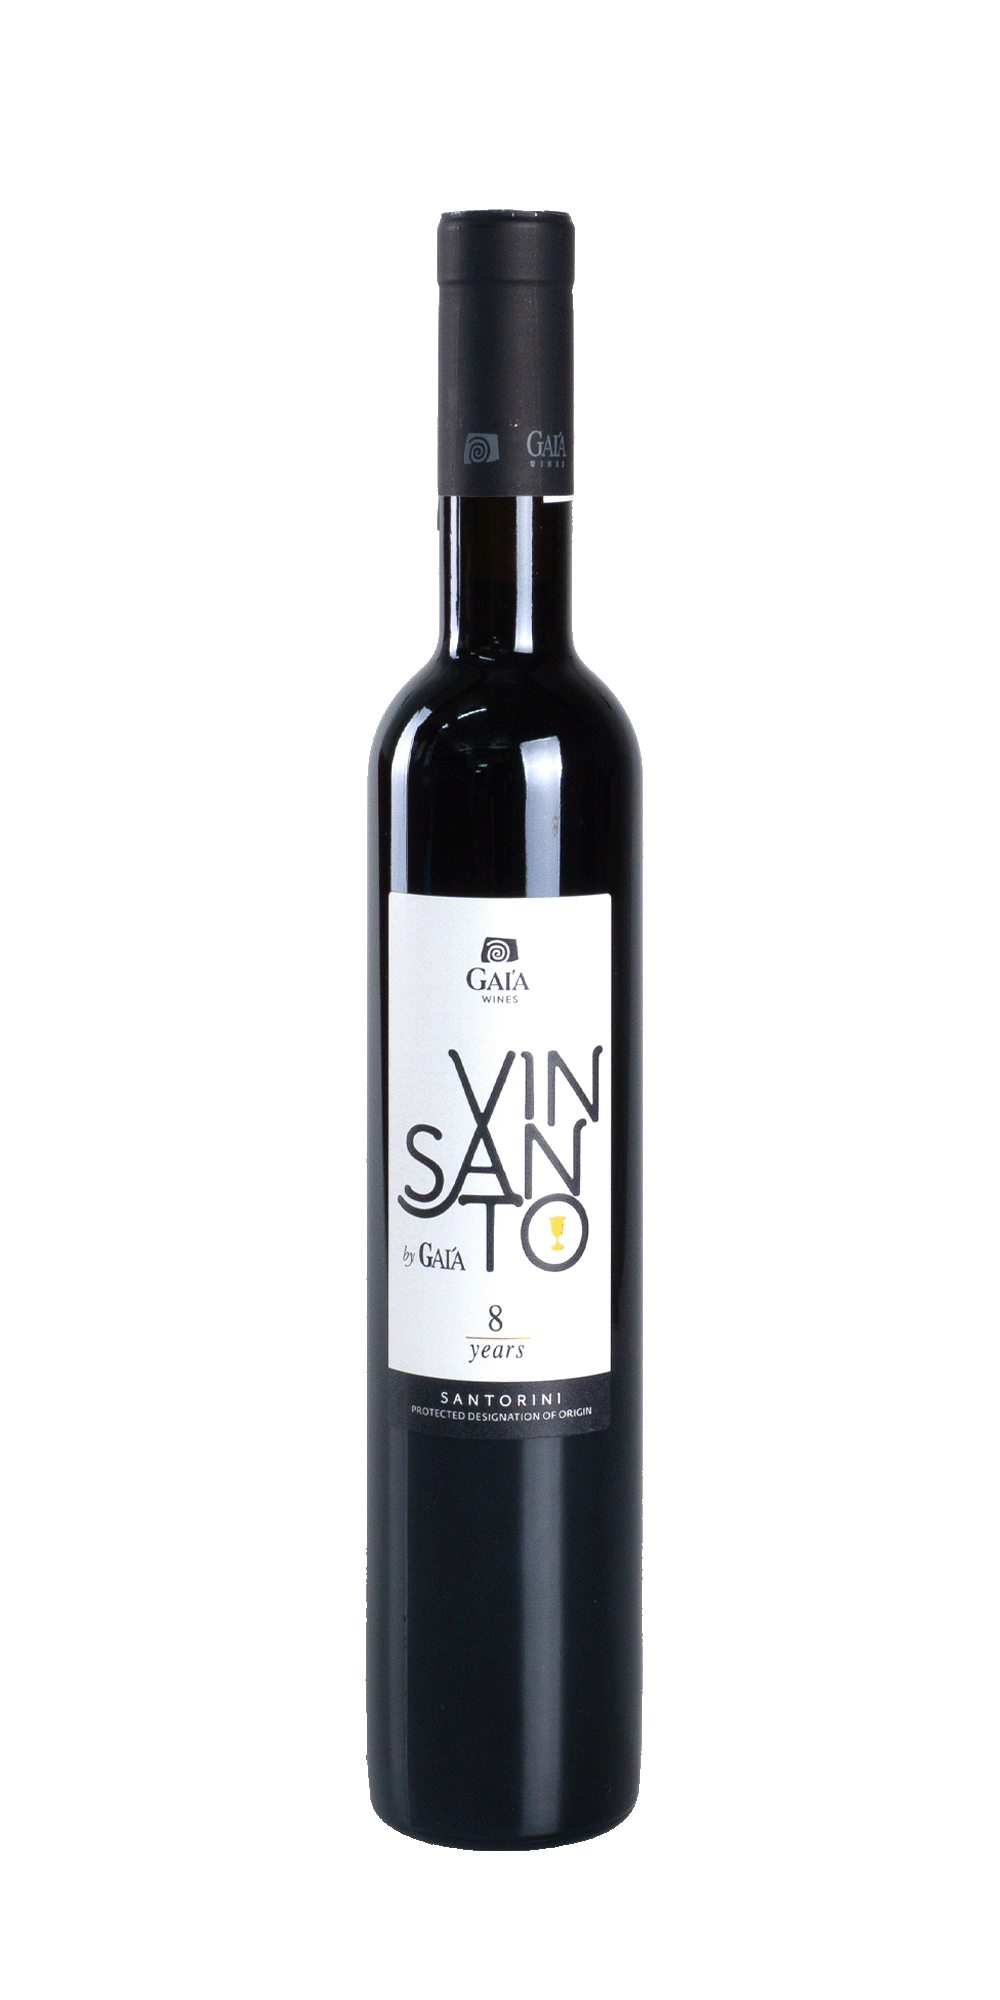 Vinsanto 8 years - Gaia Wines 